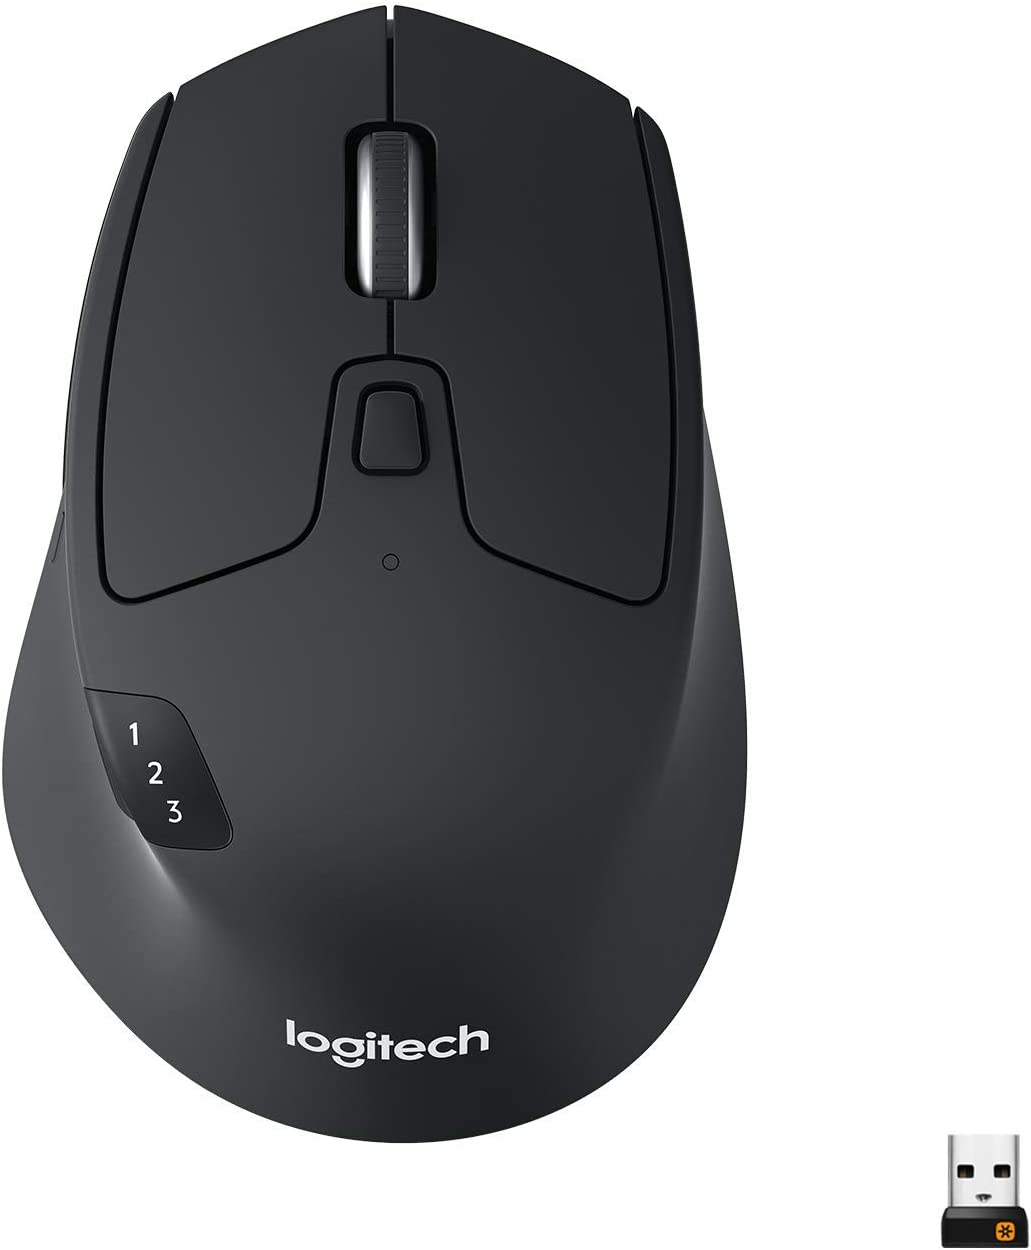 Logitech M720 Triathlon Wireless Optical Mouse - Black (New)